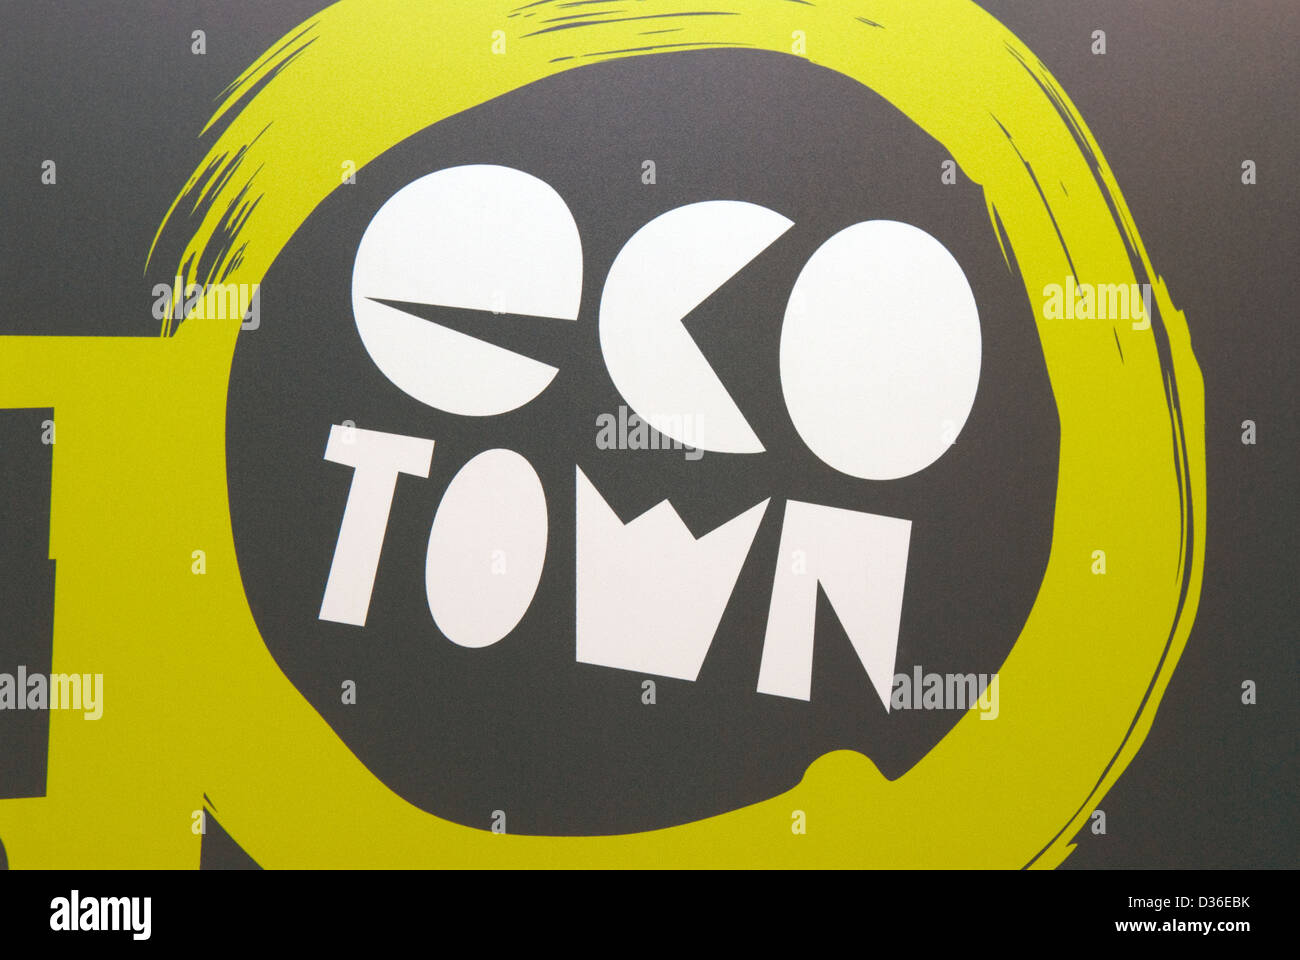 Sign/logo for proposed new eco town, Bordon, Hampshire, UK. Stock Photo